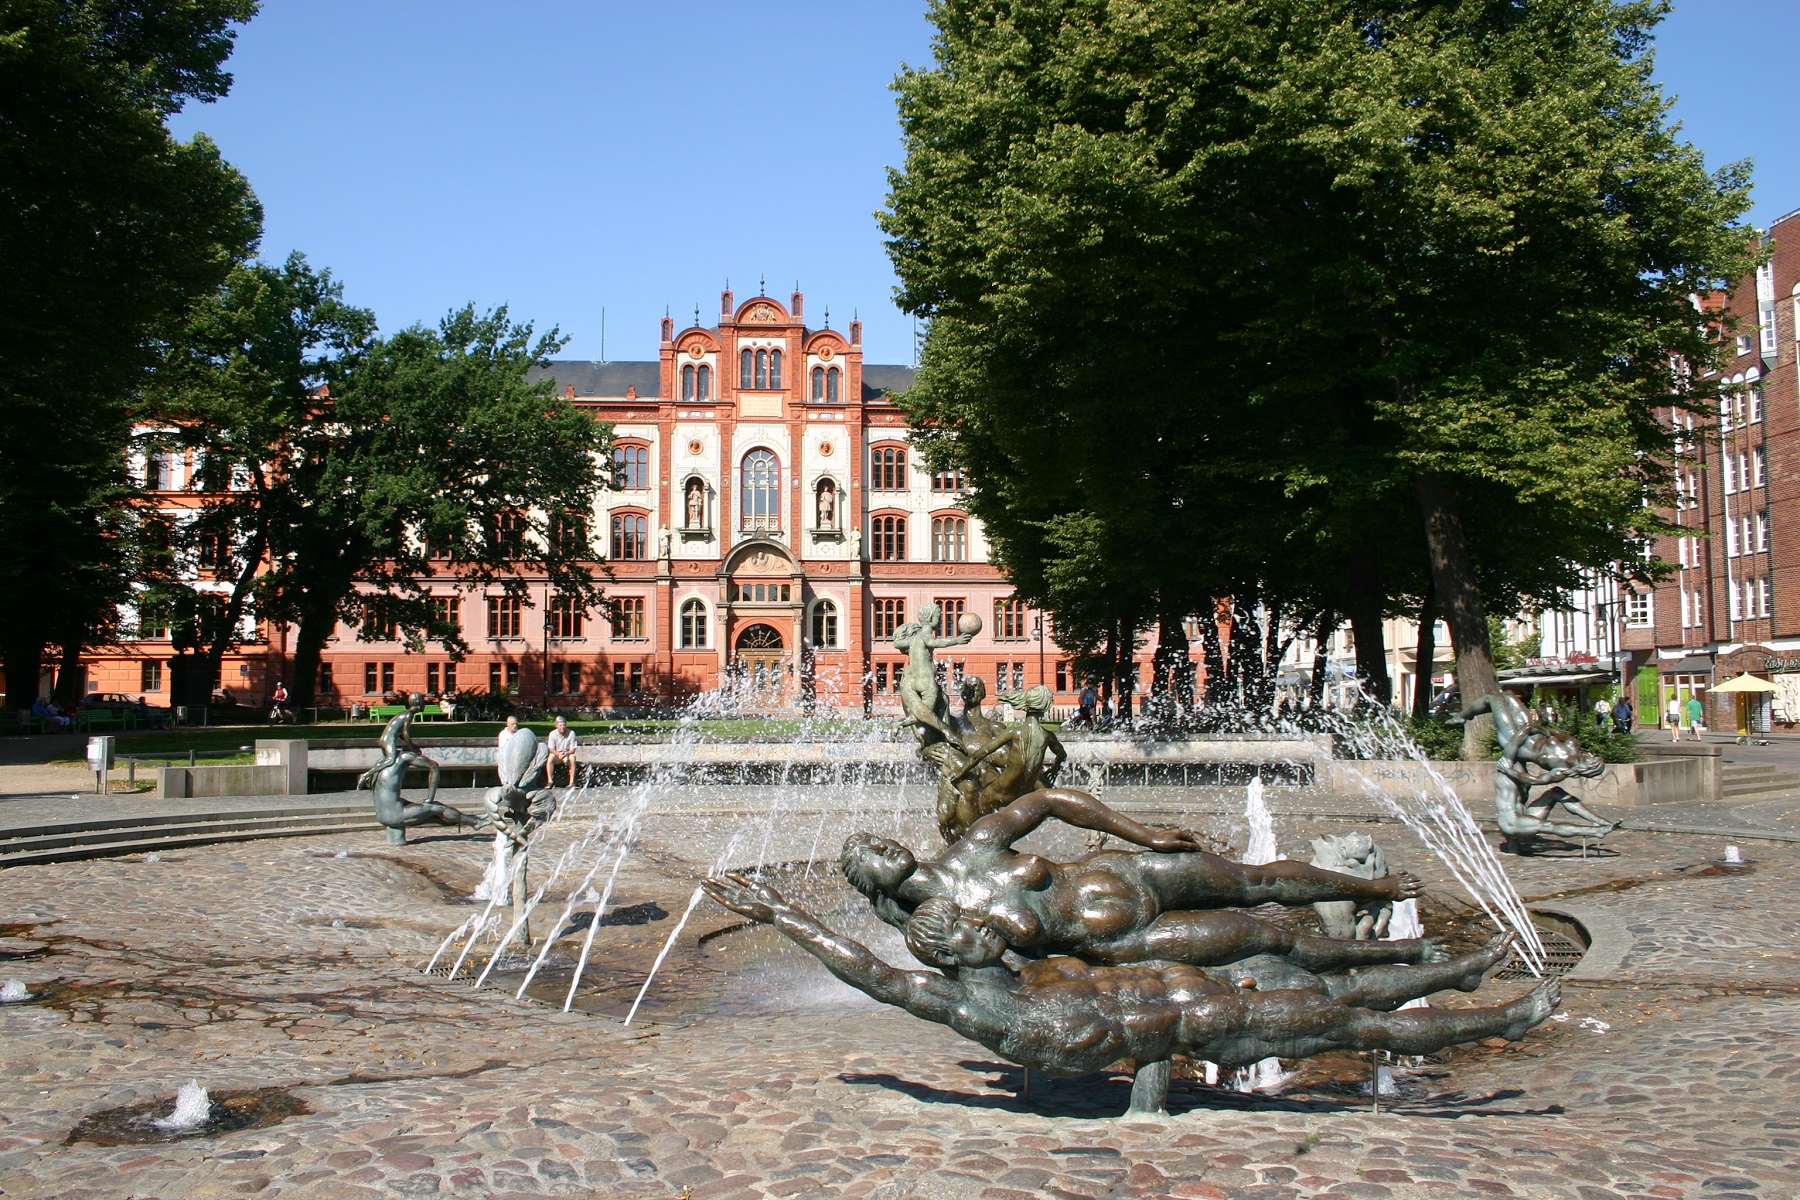 University Square, Rostock